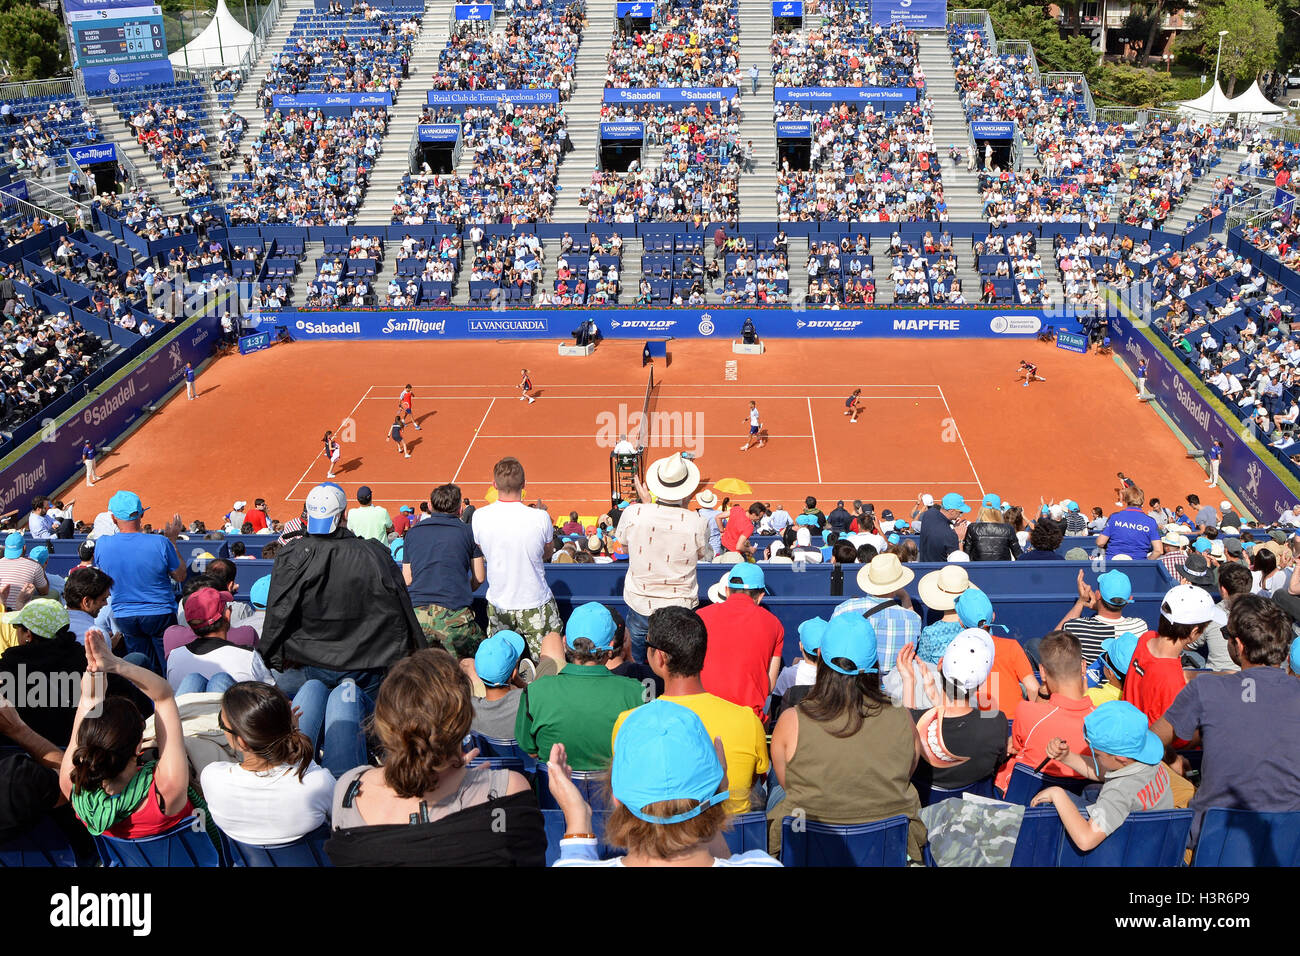 BARCELONA - Abr 26: espectadores de la ATP Barcelona Open Banc Sabadell, Conde de Godó torneo. Foto de stock